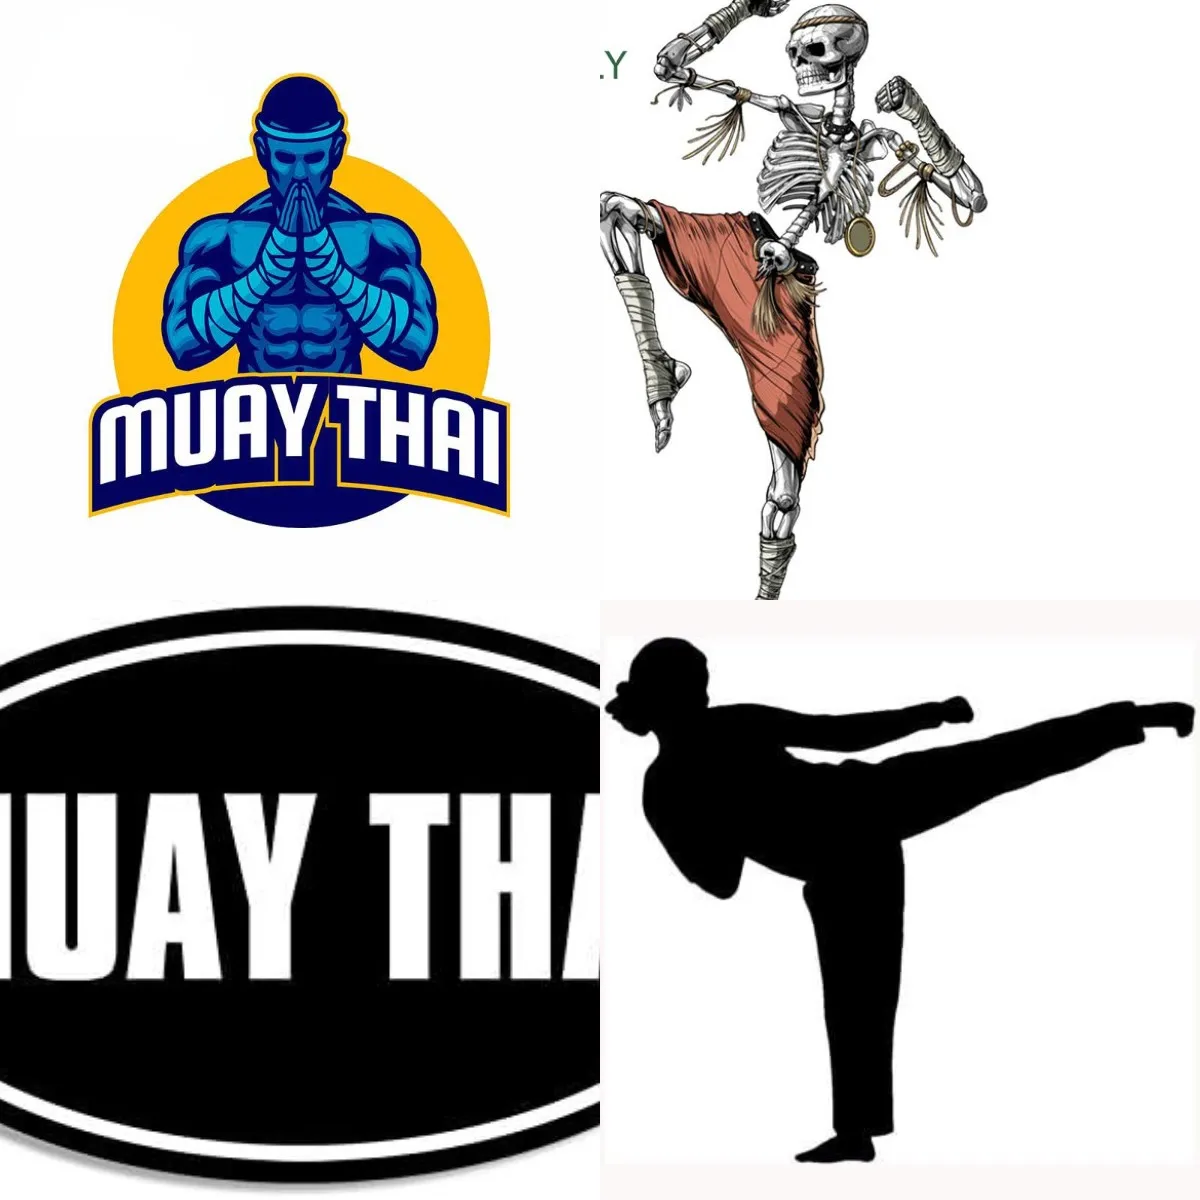 

Black Oval Muay Thai Sticker (Martial Arts Fight MMA) Thai boxing Motorcycle Laptop Helmet Trunk Cars Windows Laptop Boat Cooler